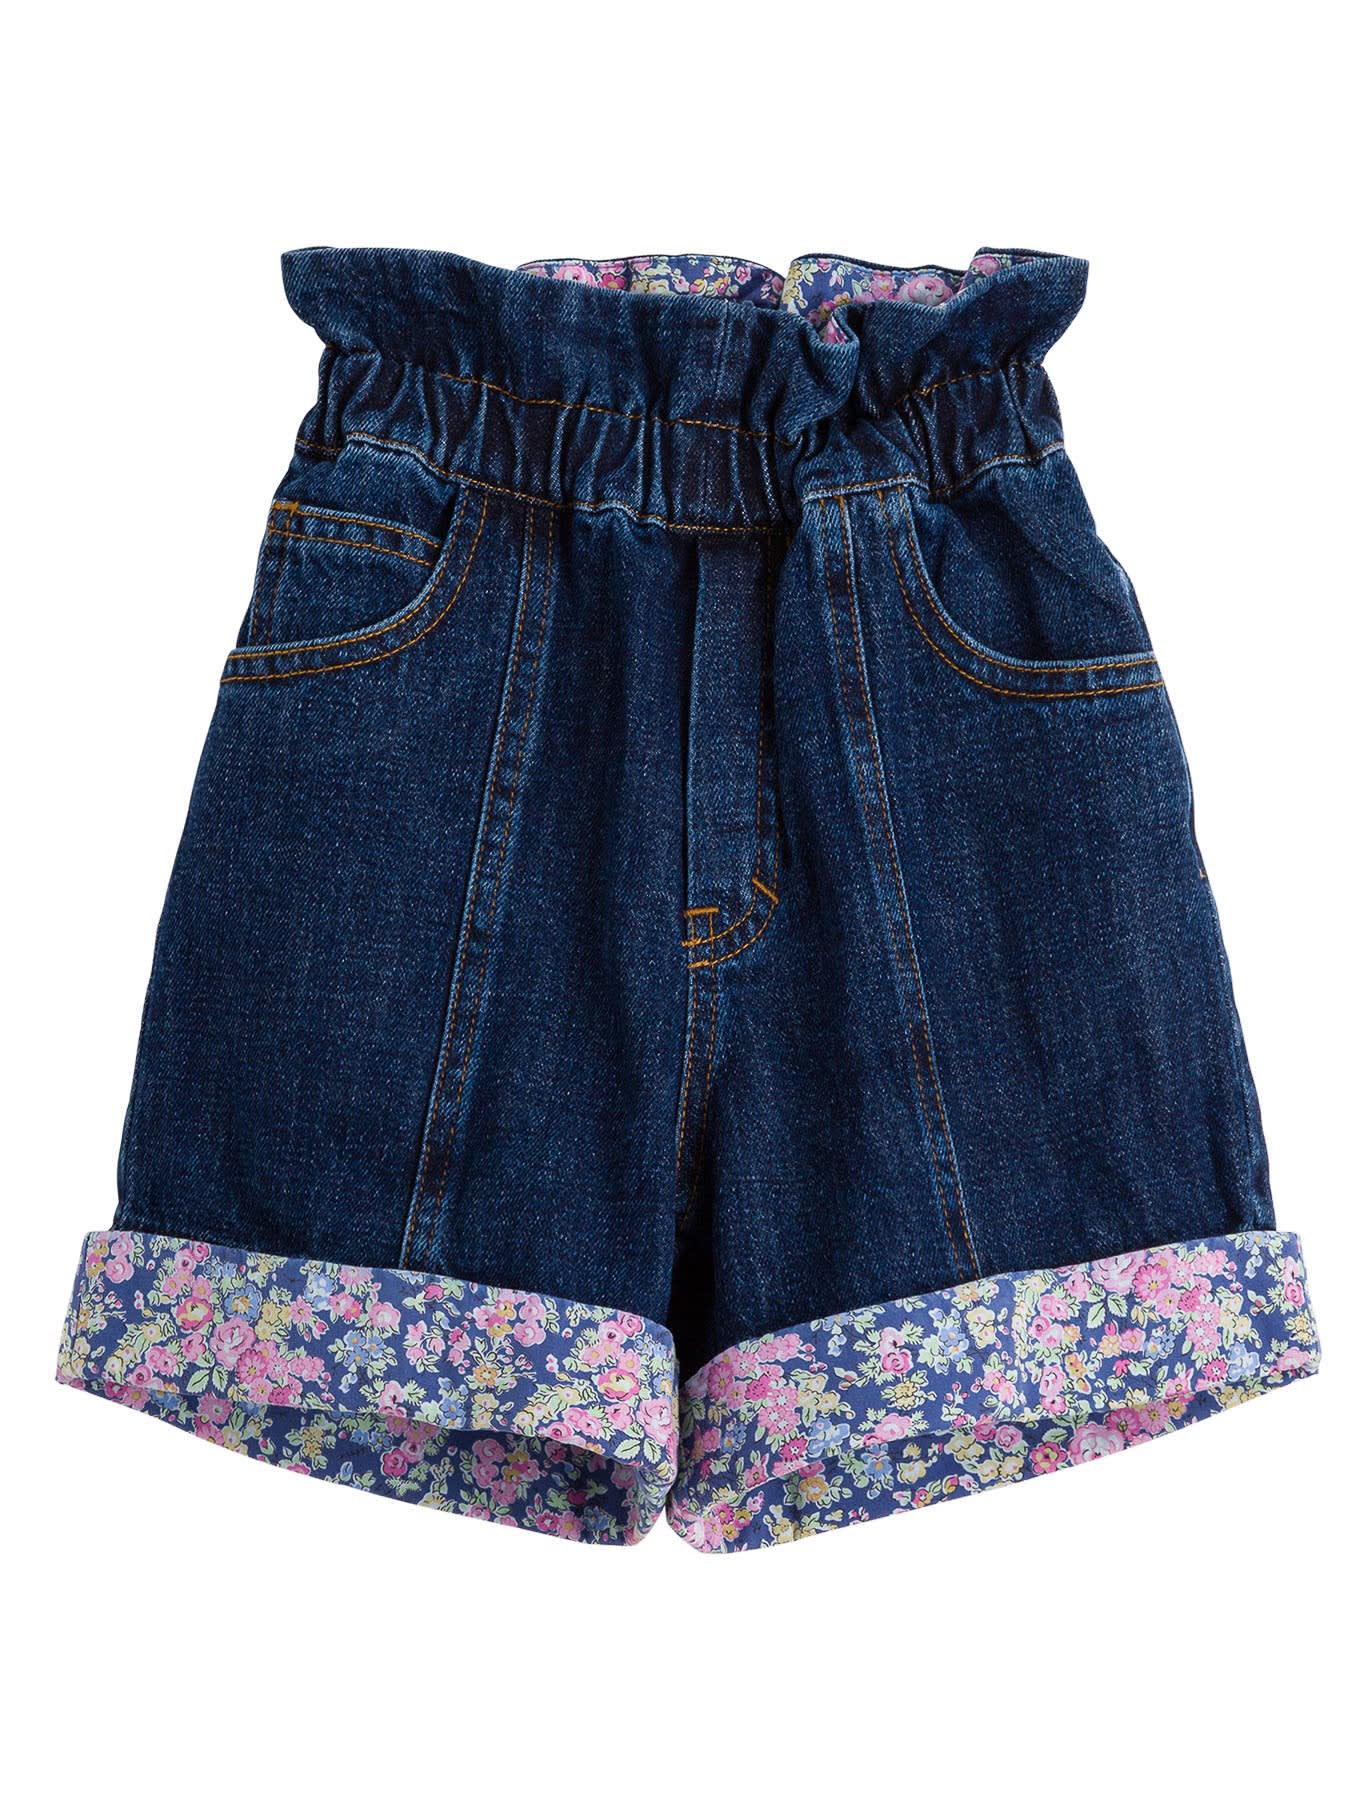 Philosophy di Lorenzo Serafini Kids Floral Bottom Shorts